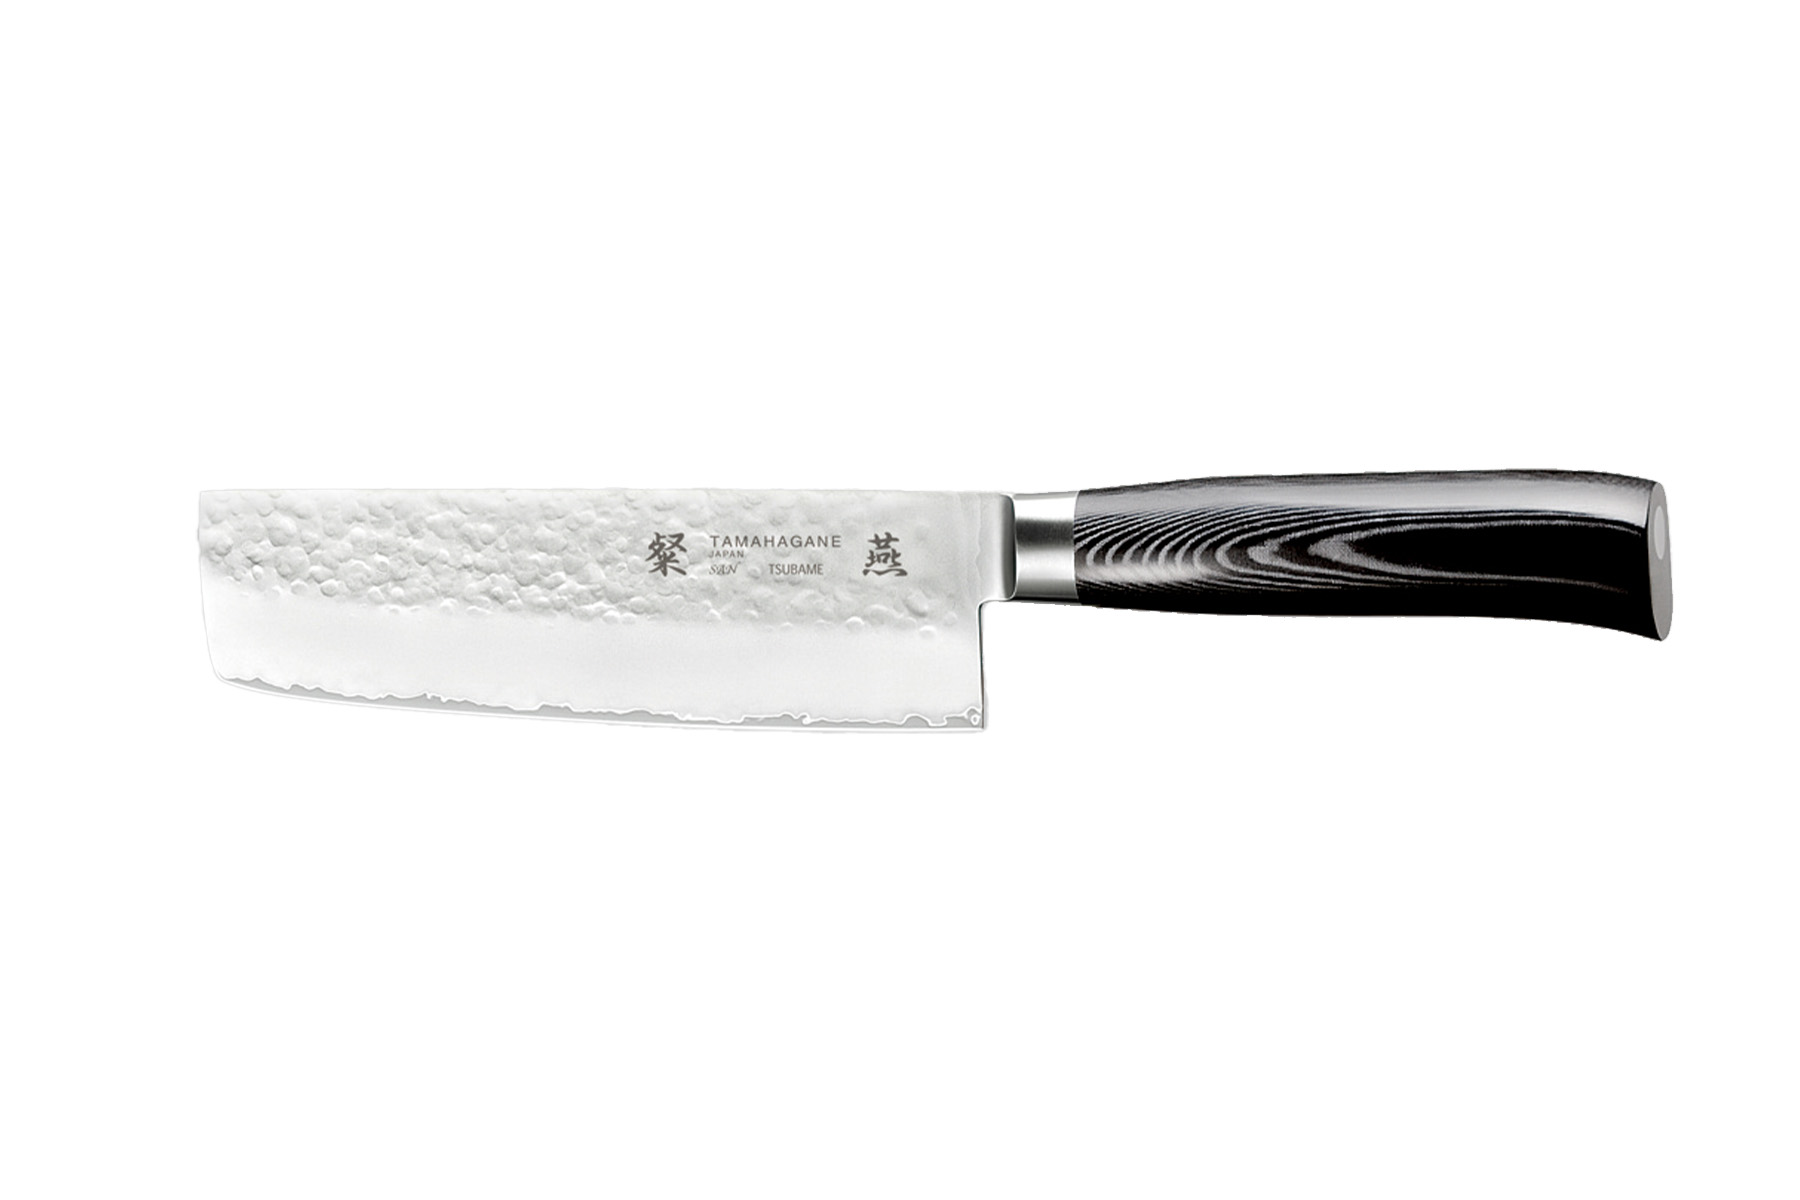 Couteau japonais Tamahagane Tsubame Hammered - Couteau nakiri 16 cm